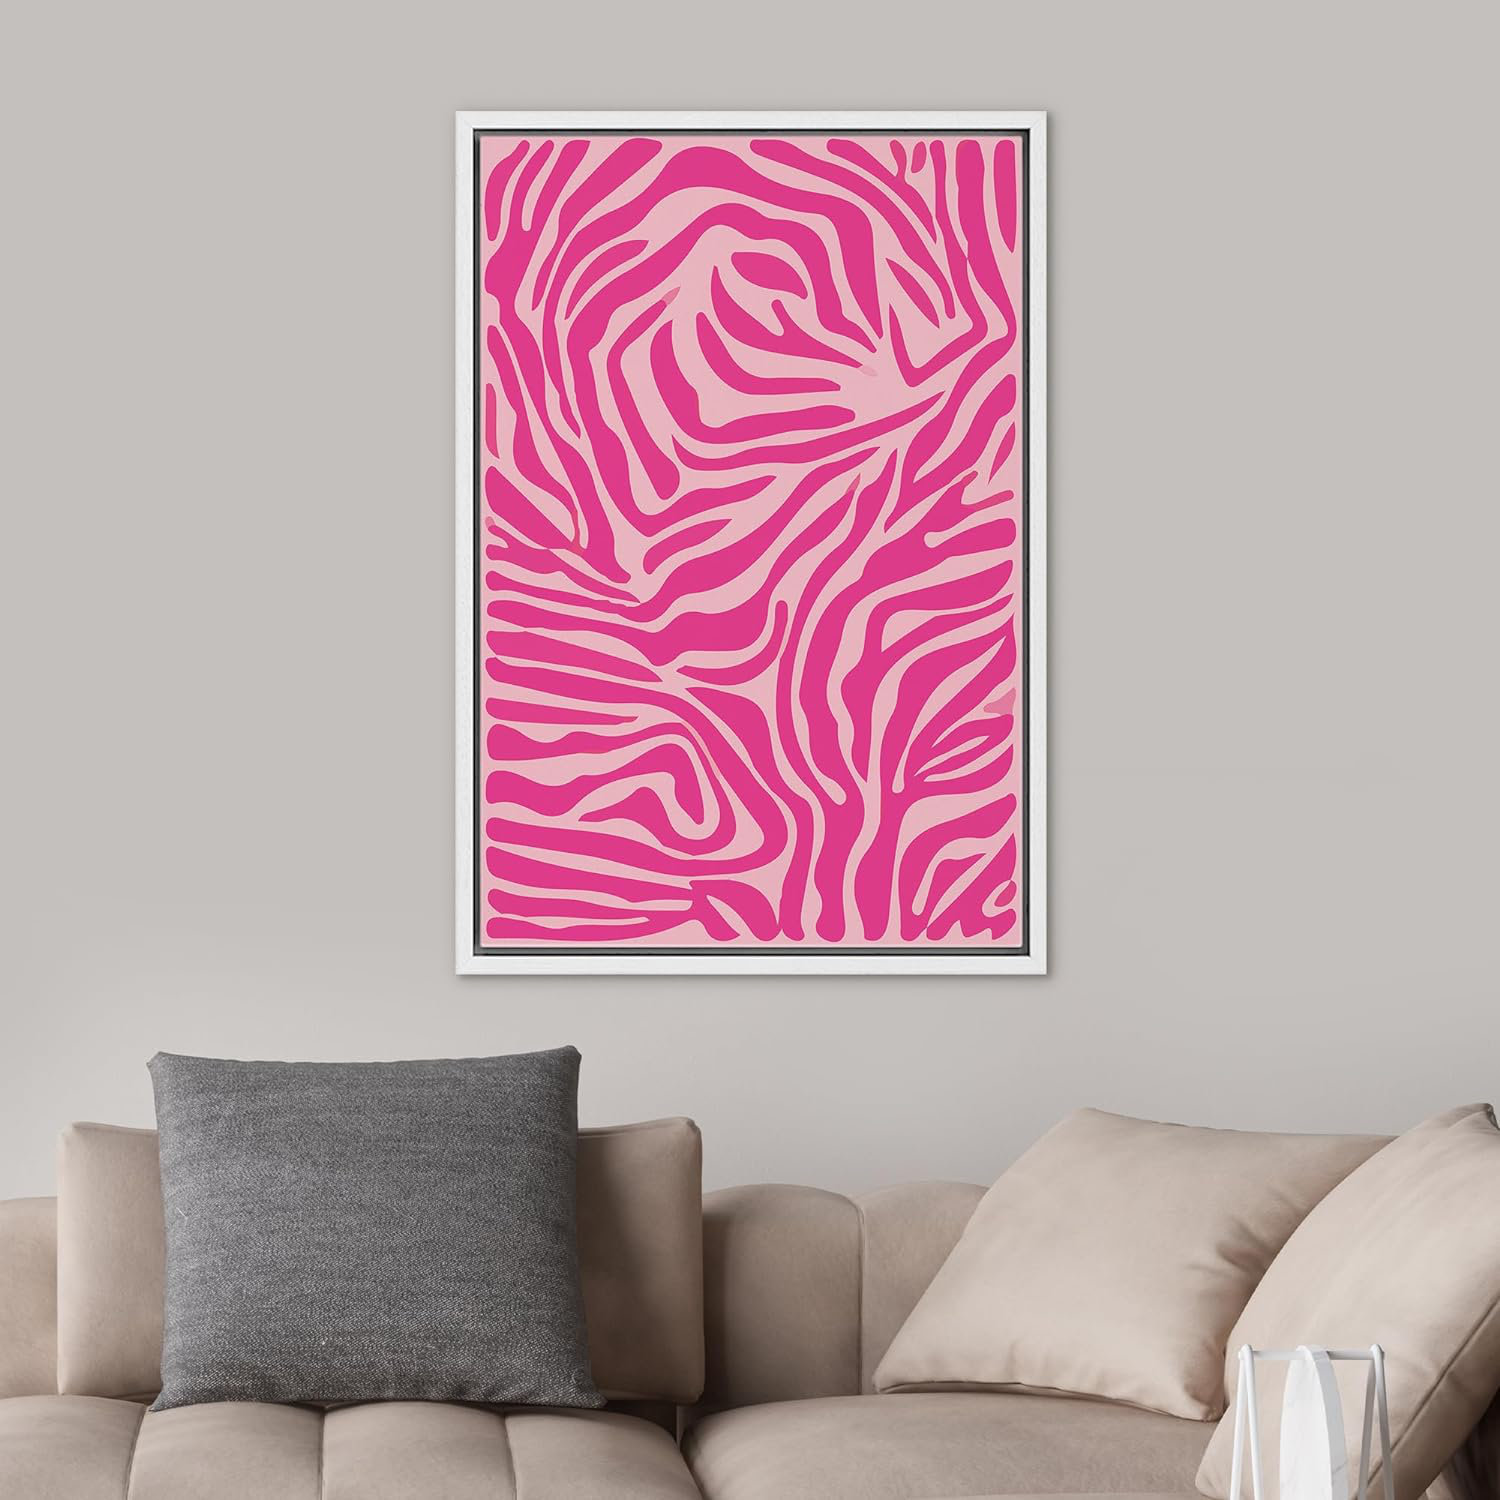 IDEA4WALL Framed Canvas Print Wall Art Preppy Room Decor Pink Stripes Illustrations Girl's Bedroom Colorful for Living Room, Bedroom, Office Framed on